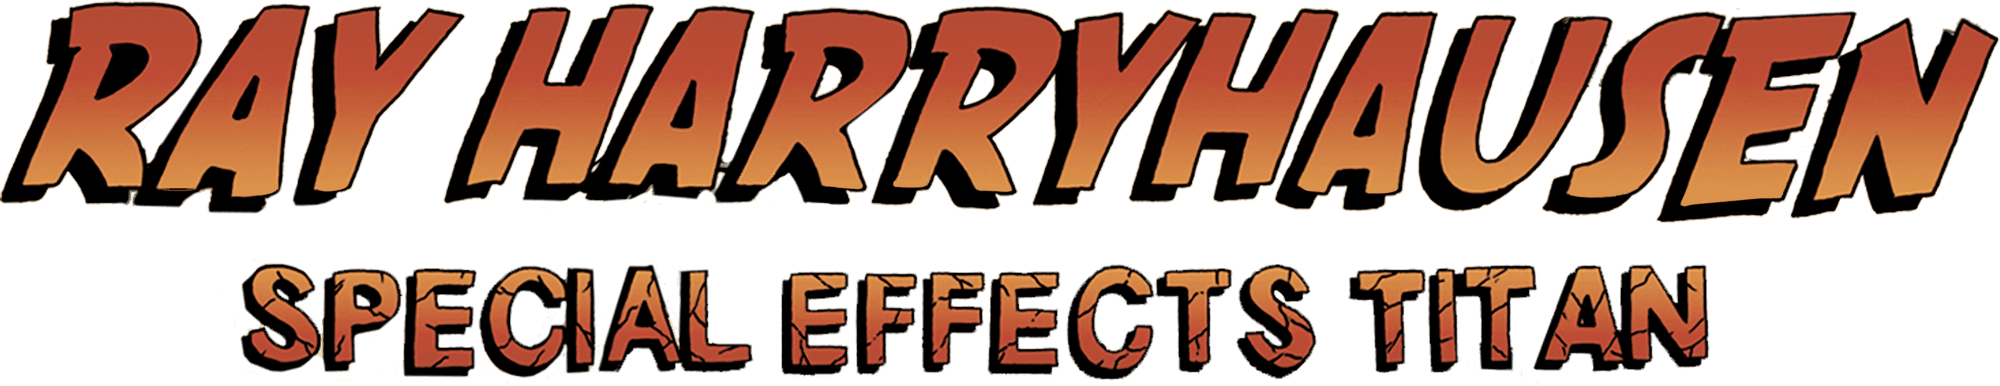 Ray Harryhausen: Special Effects Titan logo